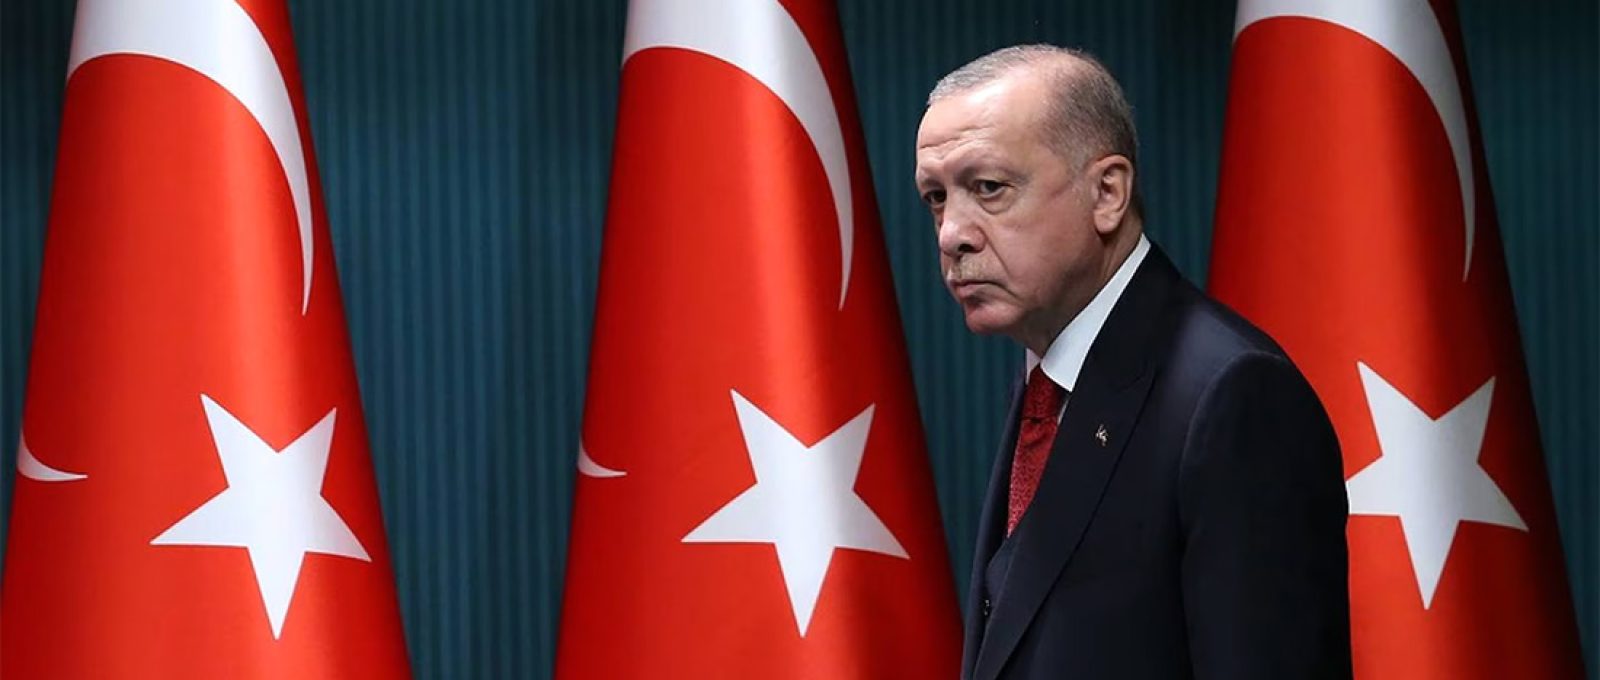 O presidente da Turquia, Recep Tayyip Erdogan (Adem Altan/AFP via Getty Images).